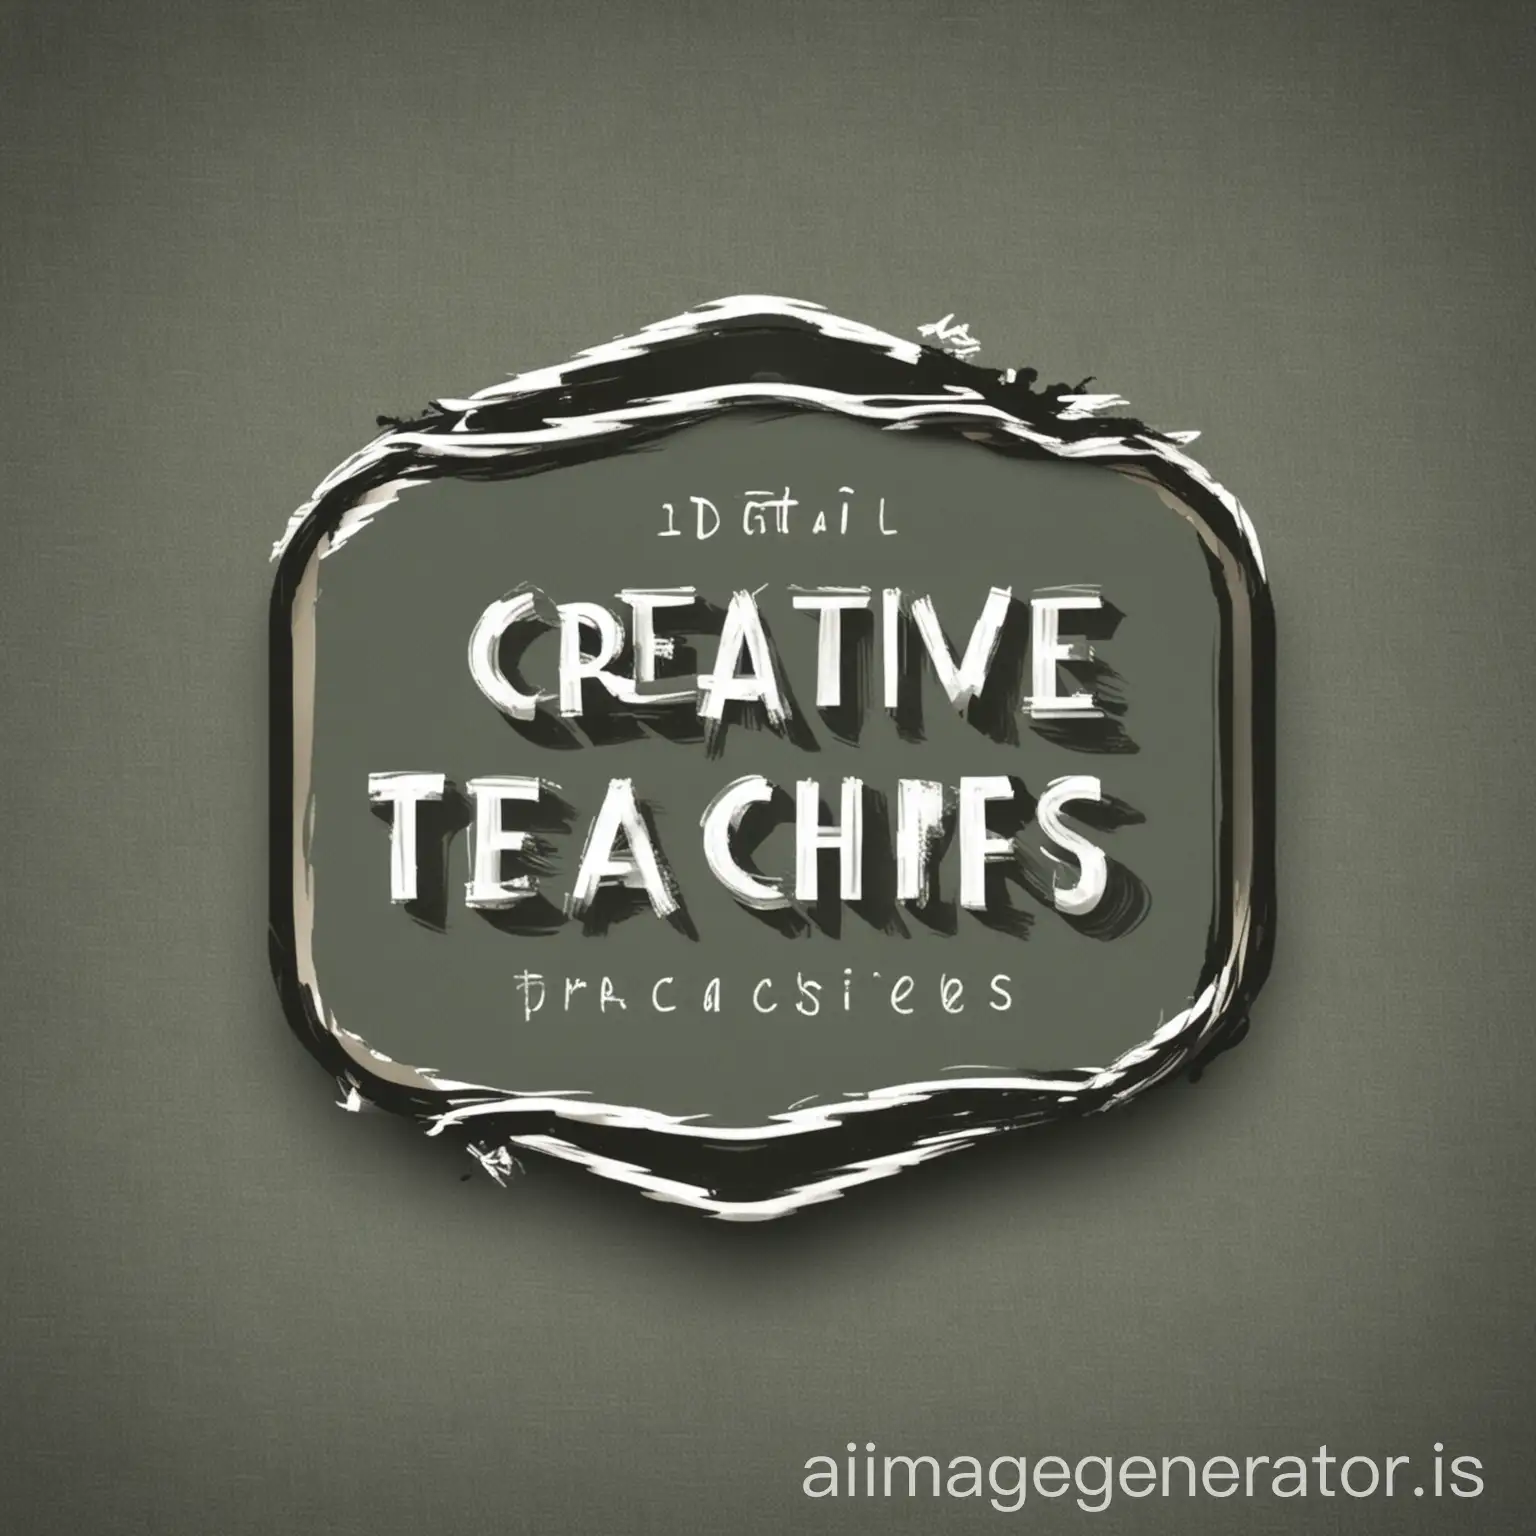 Creative-Group-of-Teachers-Digital-Practices-Logo